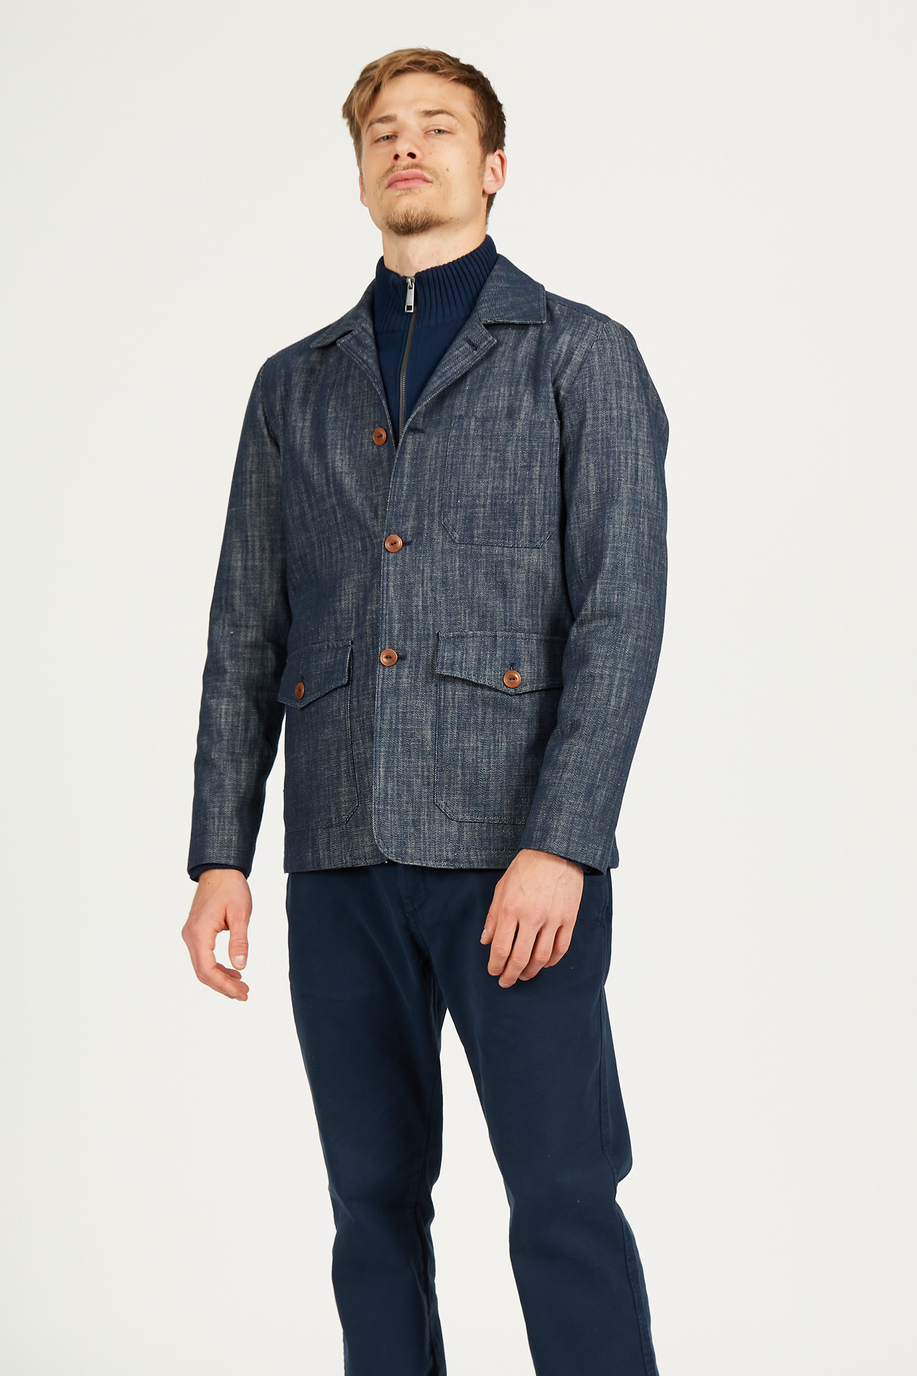 Men's Sahariana jacket in 100% cotton, regular fit model - Jackets | La Martina - Official Online Shop